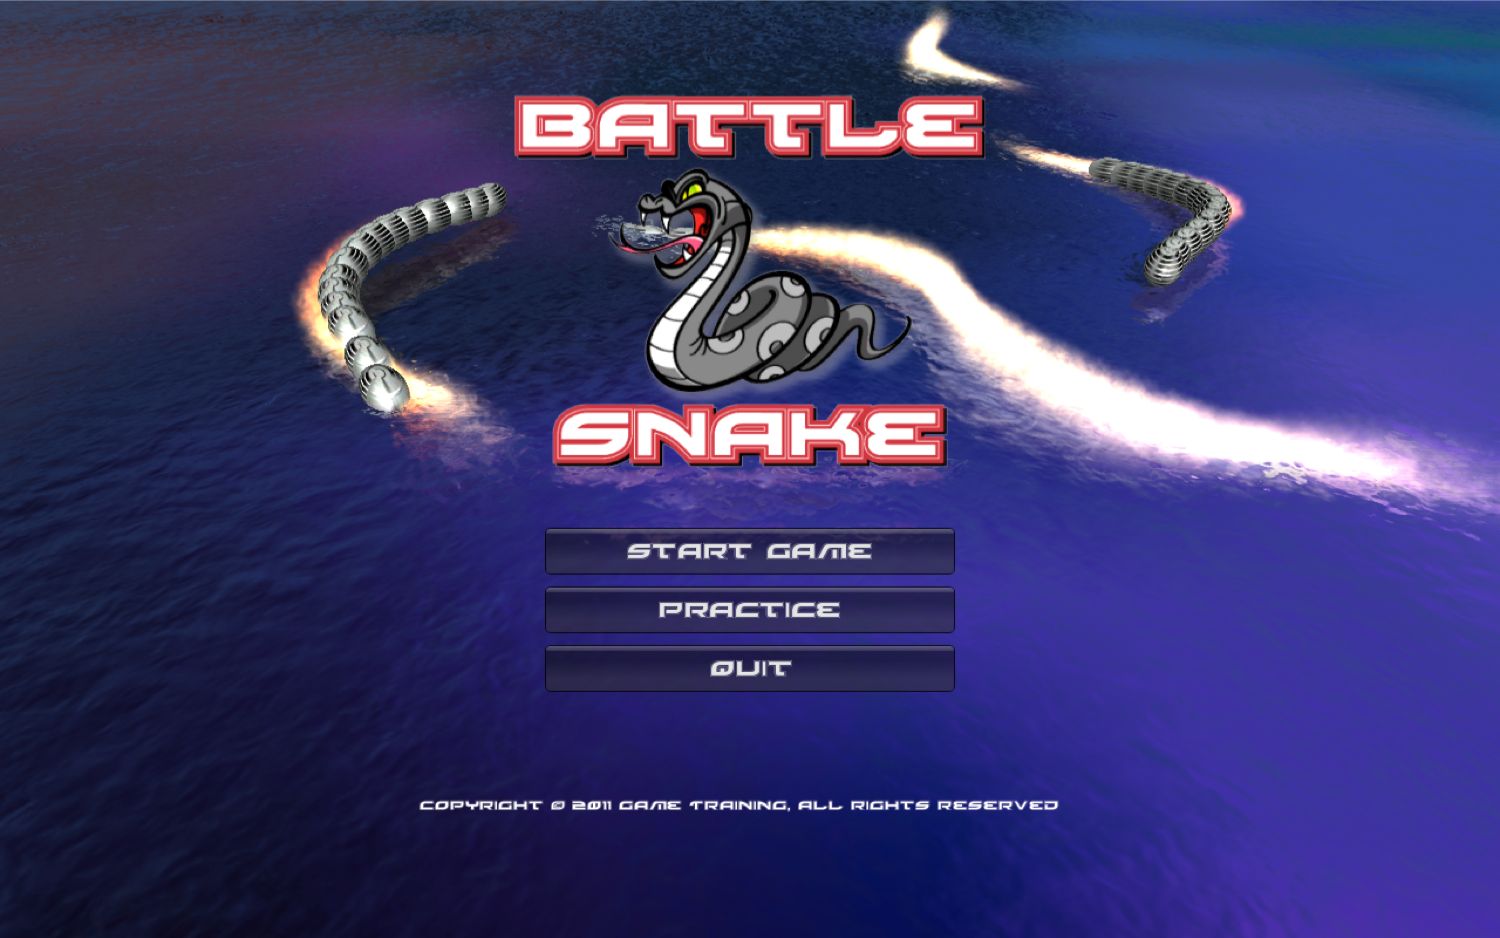 Battle Snake 1.0 : Main Menu